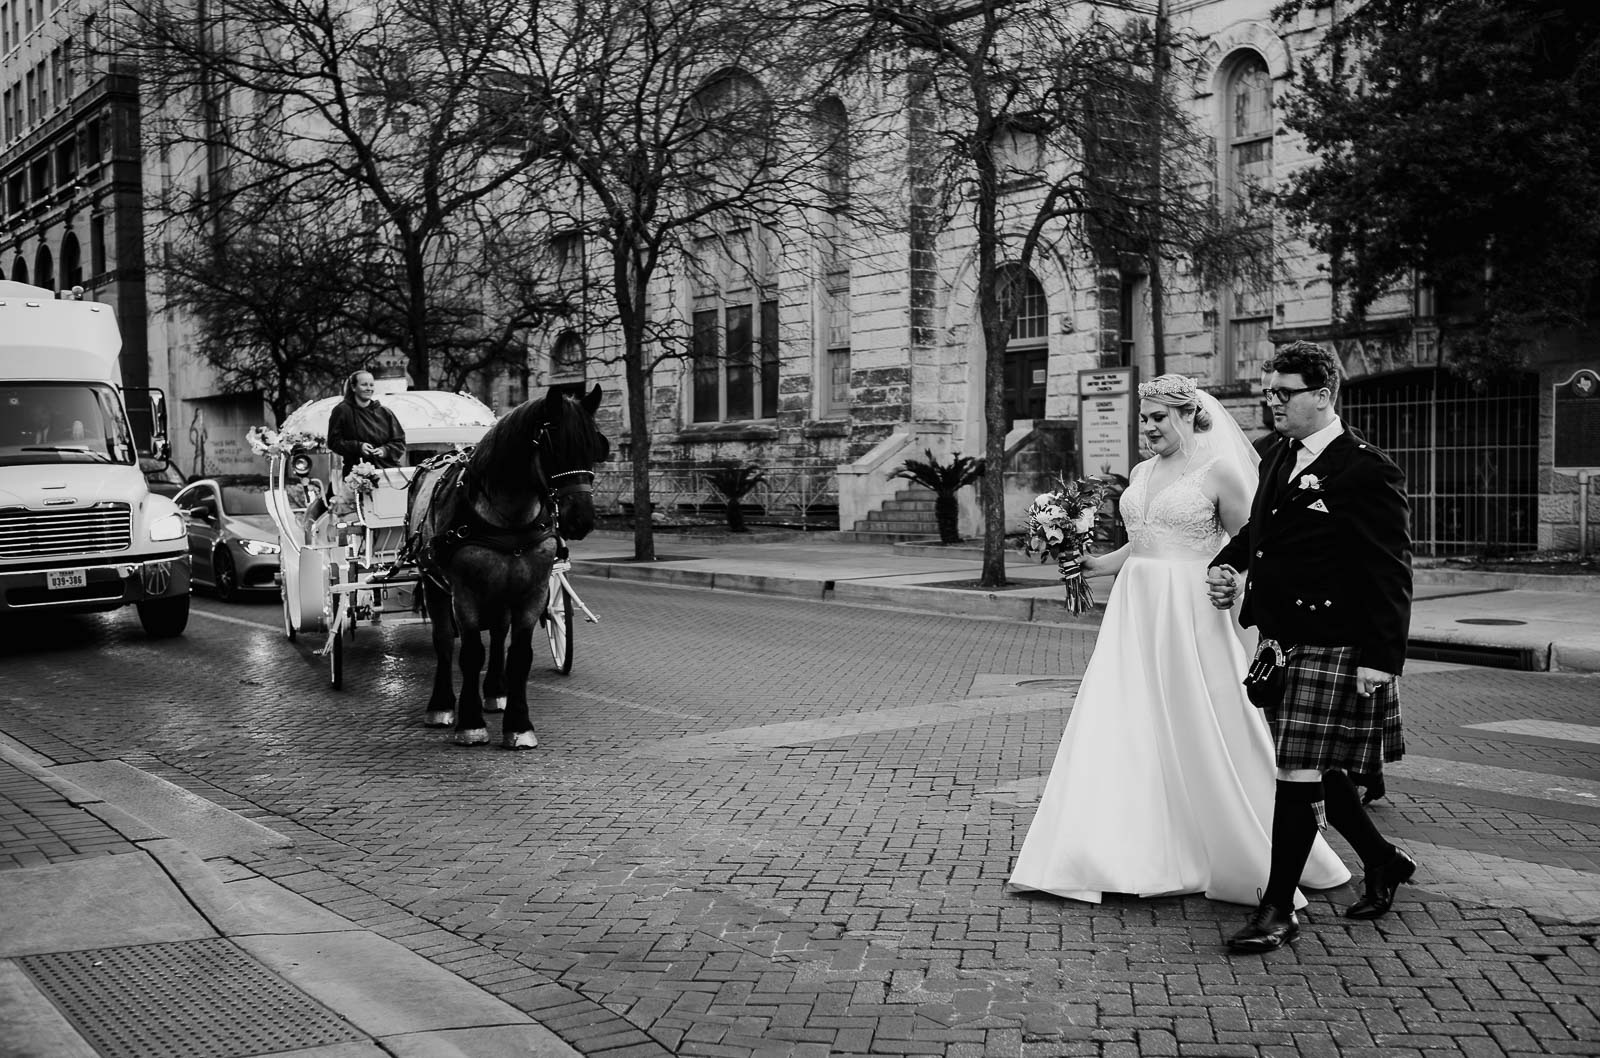 33 The St. Anthony Hotel Wedding Reception Leica photographer Philip Thomas Photography